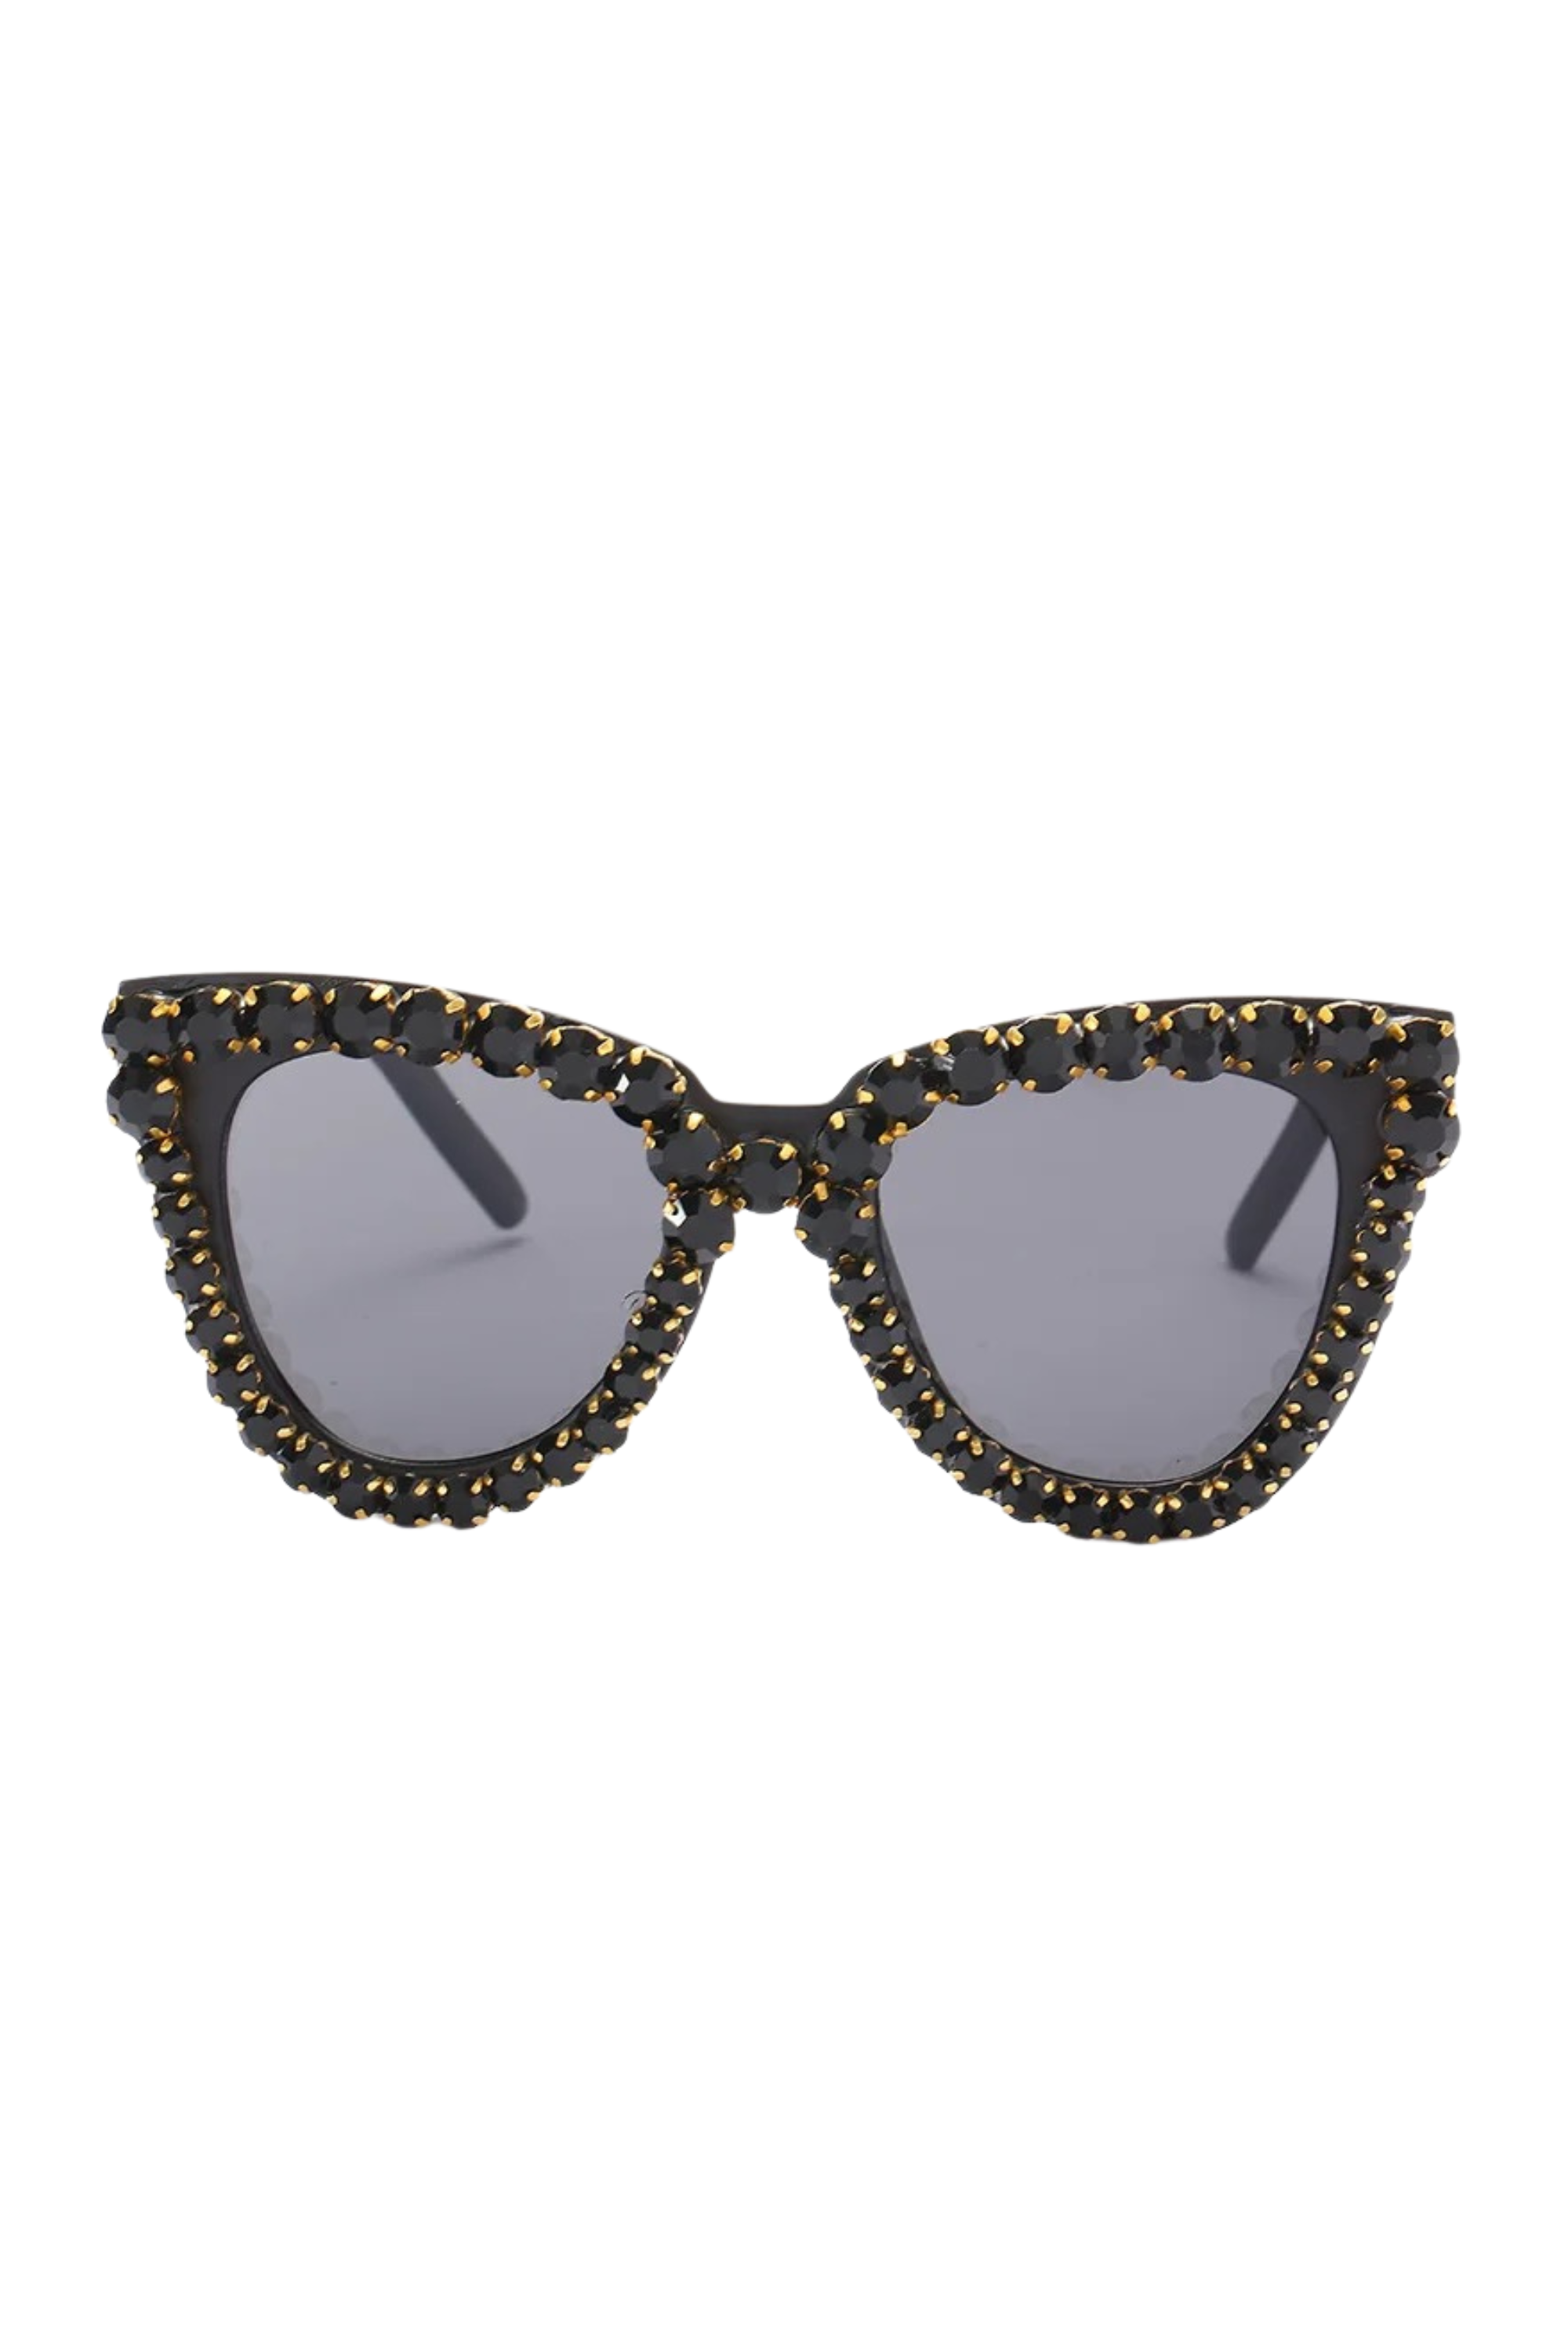 GOLDxTEAL embellished cat eye sunglasses.